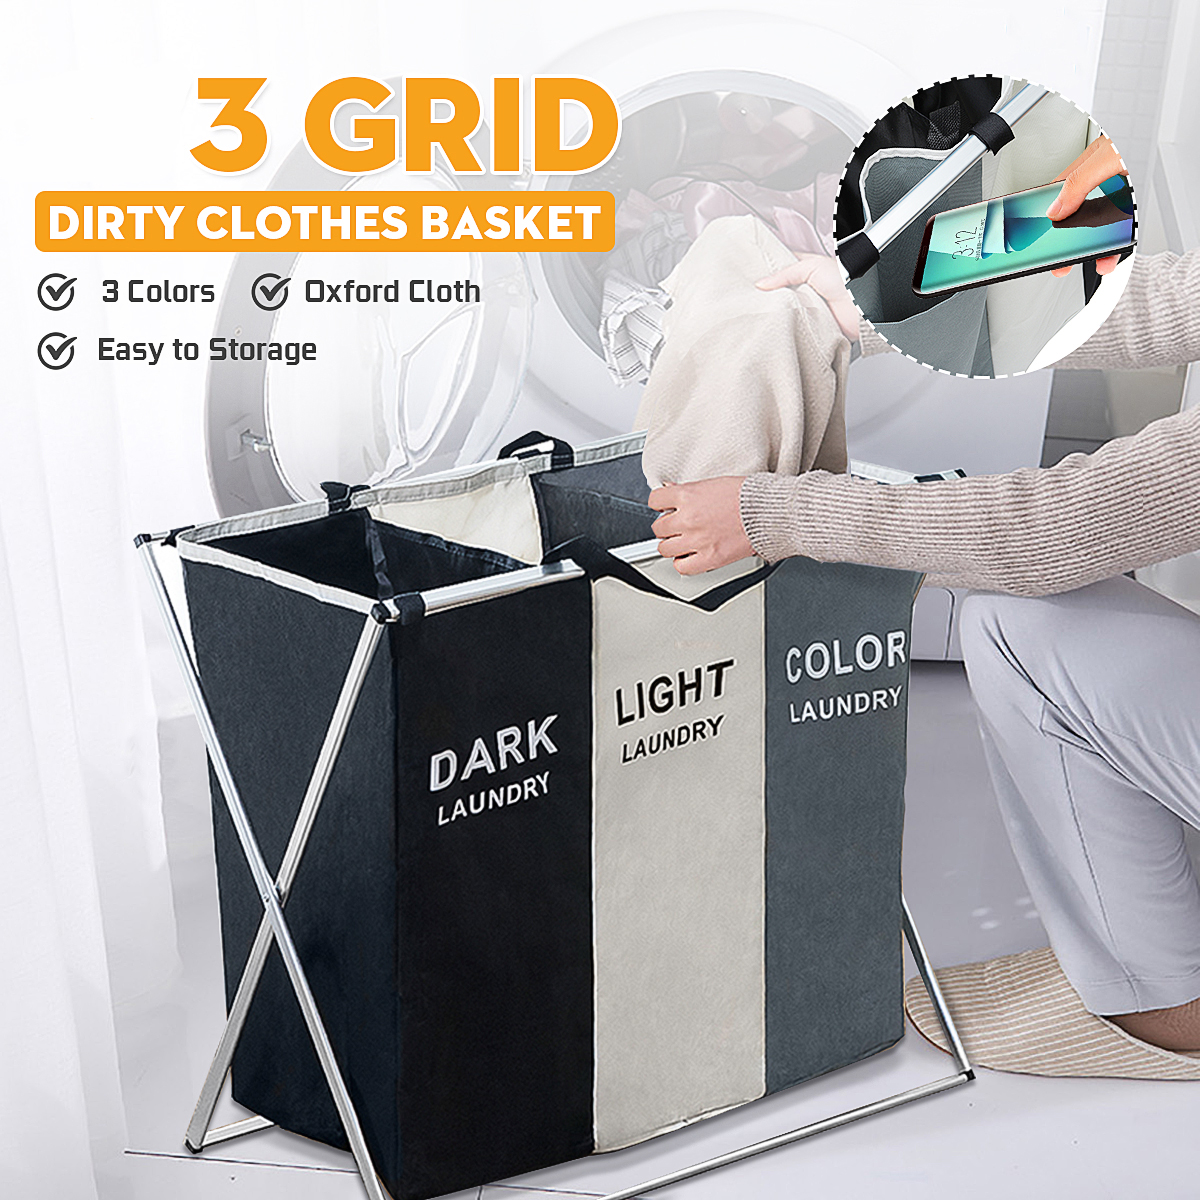 23-Cells-Dirty-Clothes-Laundry-Storage-Baskets-Organizer-Basket-Home-Storage-Basket-1759585-2